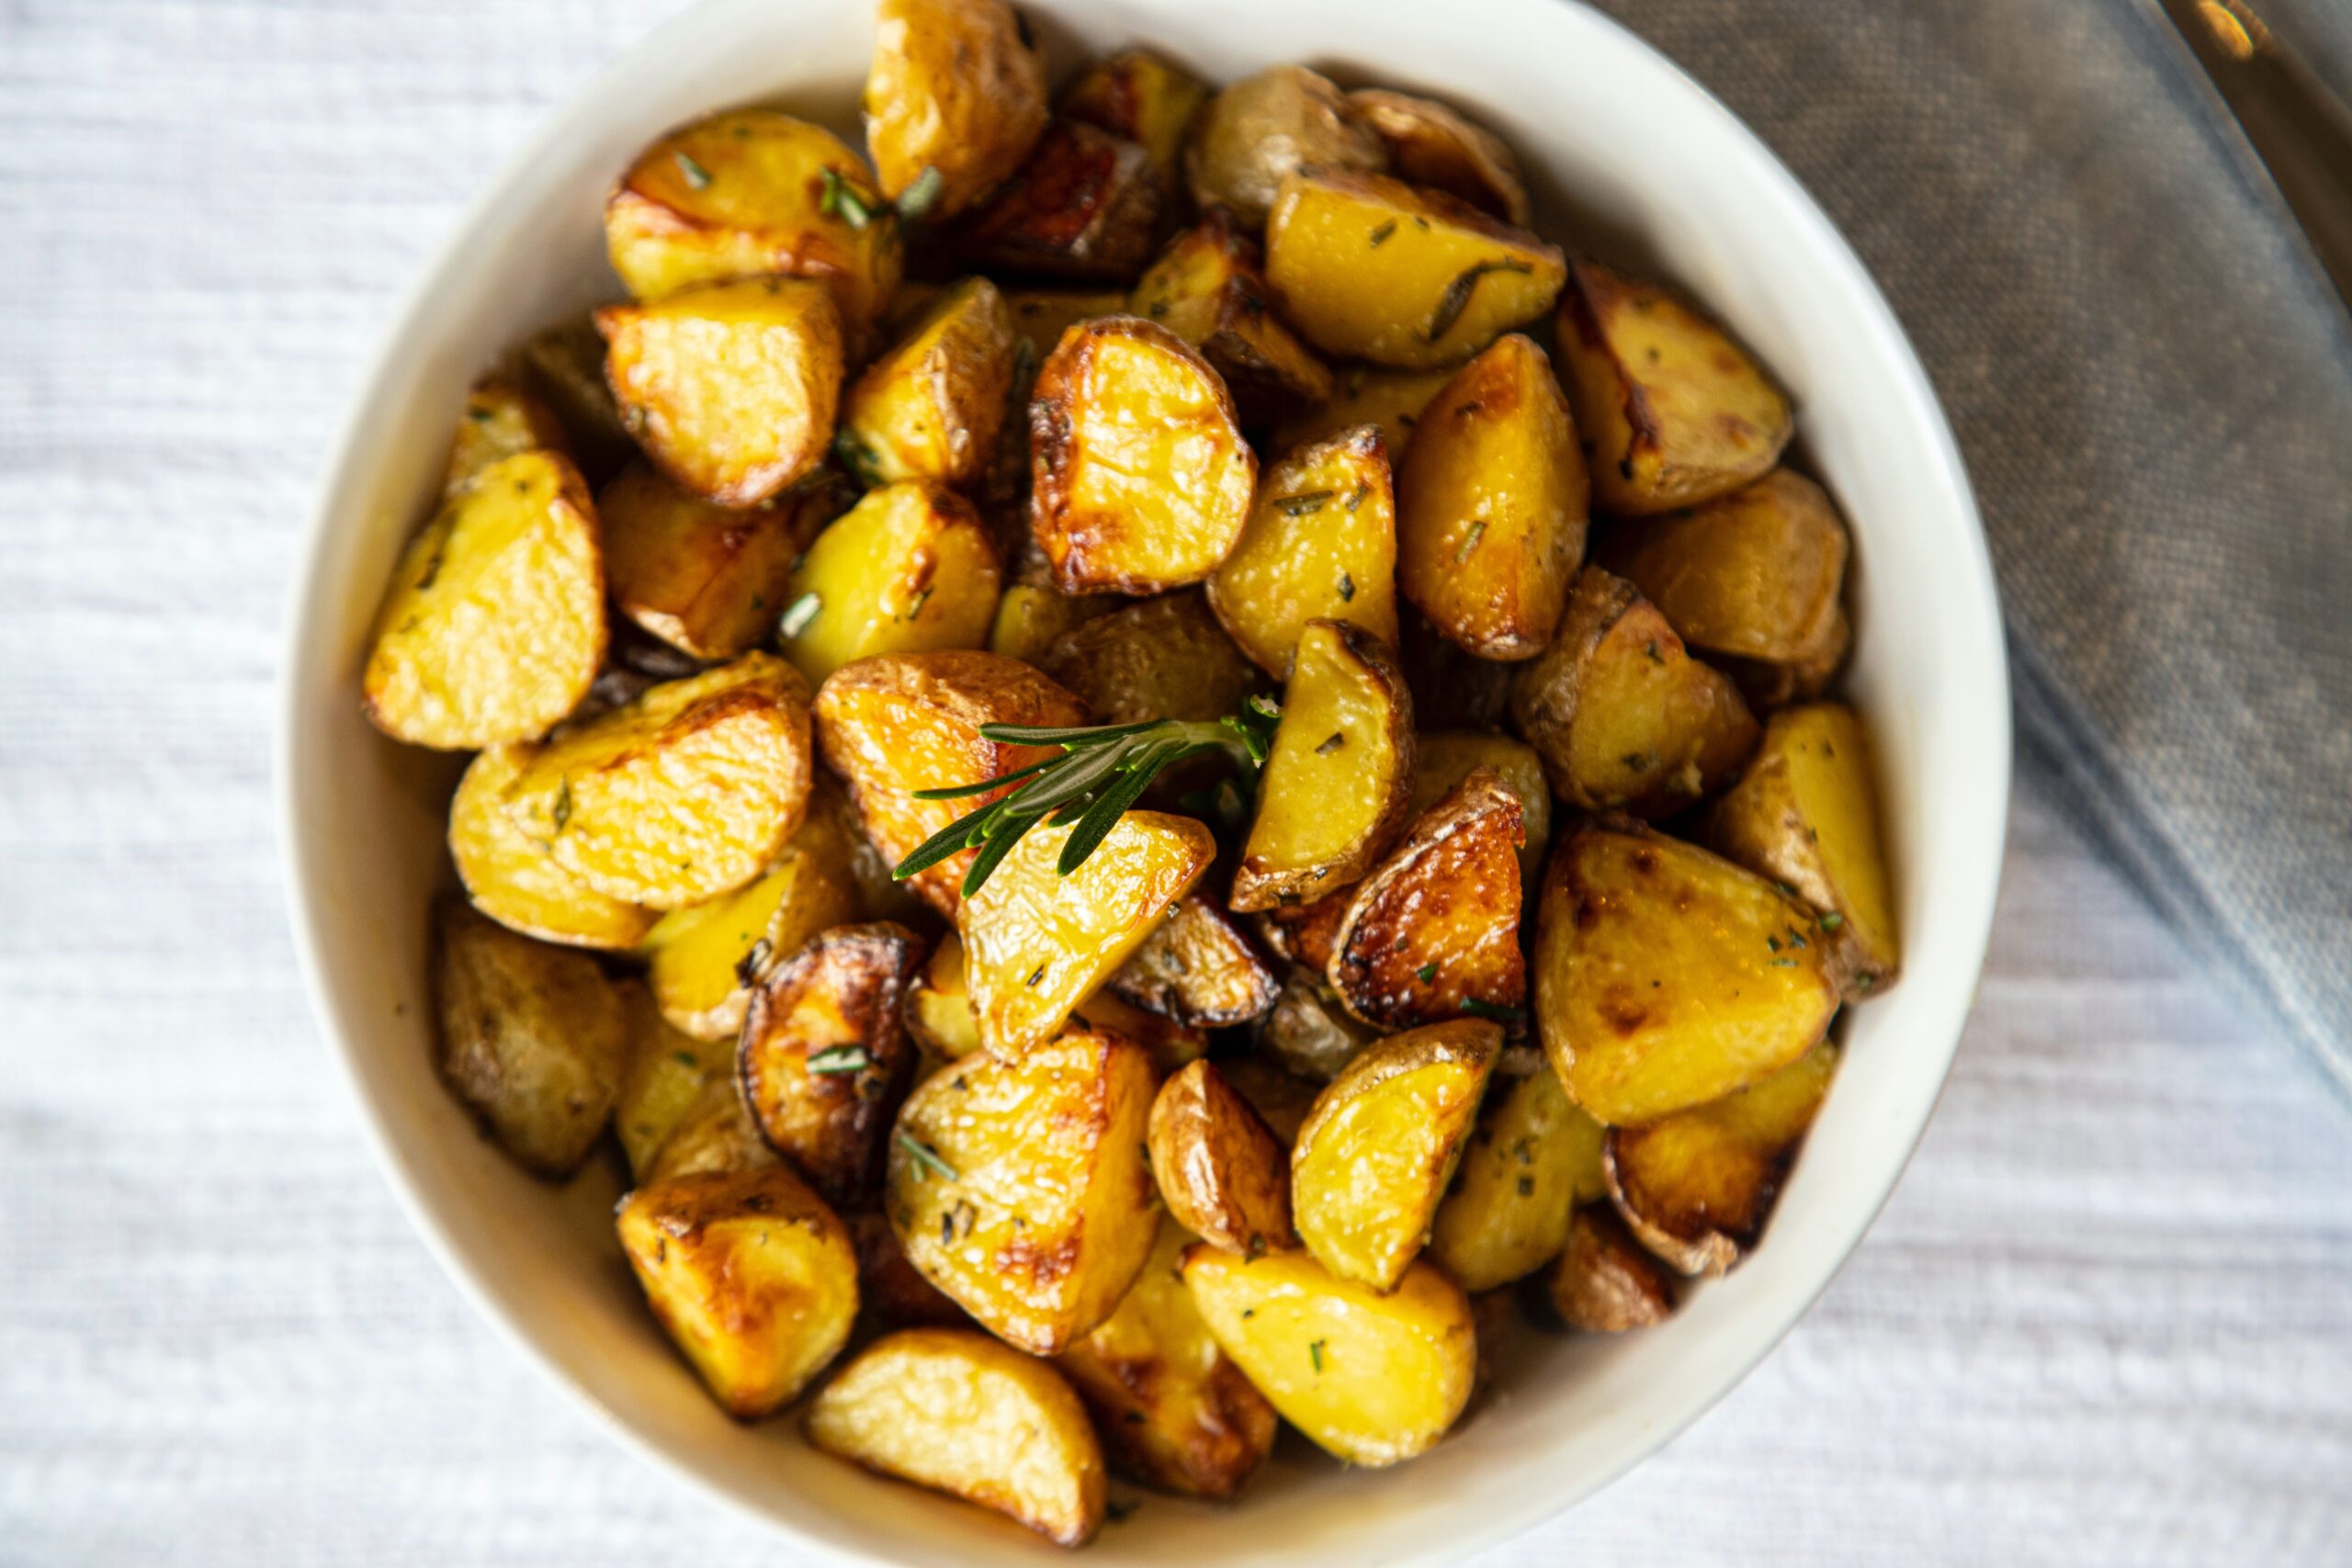 A side of roasted potatoes